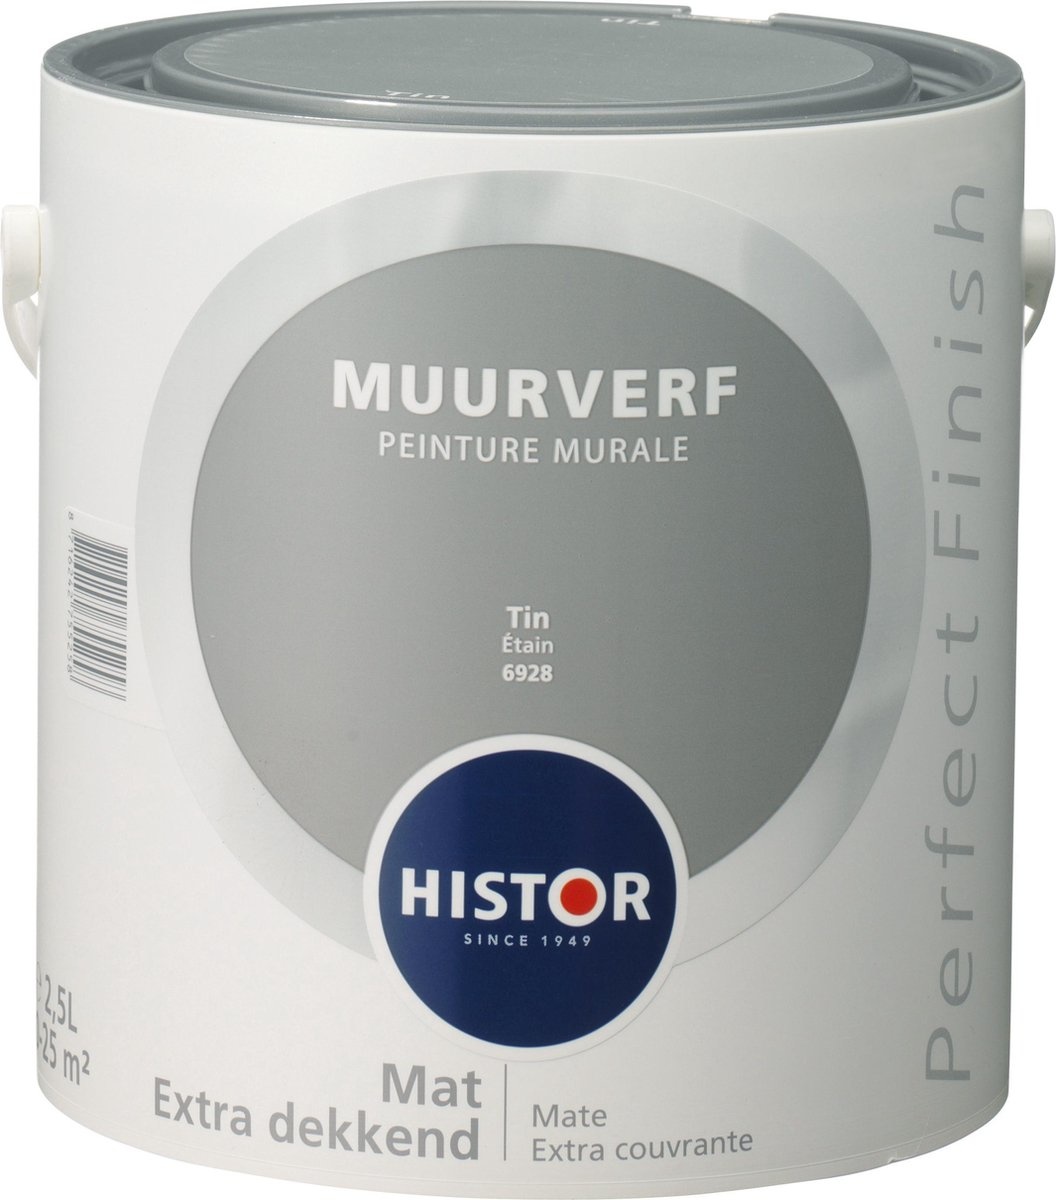 Histor Perfect Finish Muurverf Mat - Tin 2,5 liter kopen? | Korting tot De